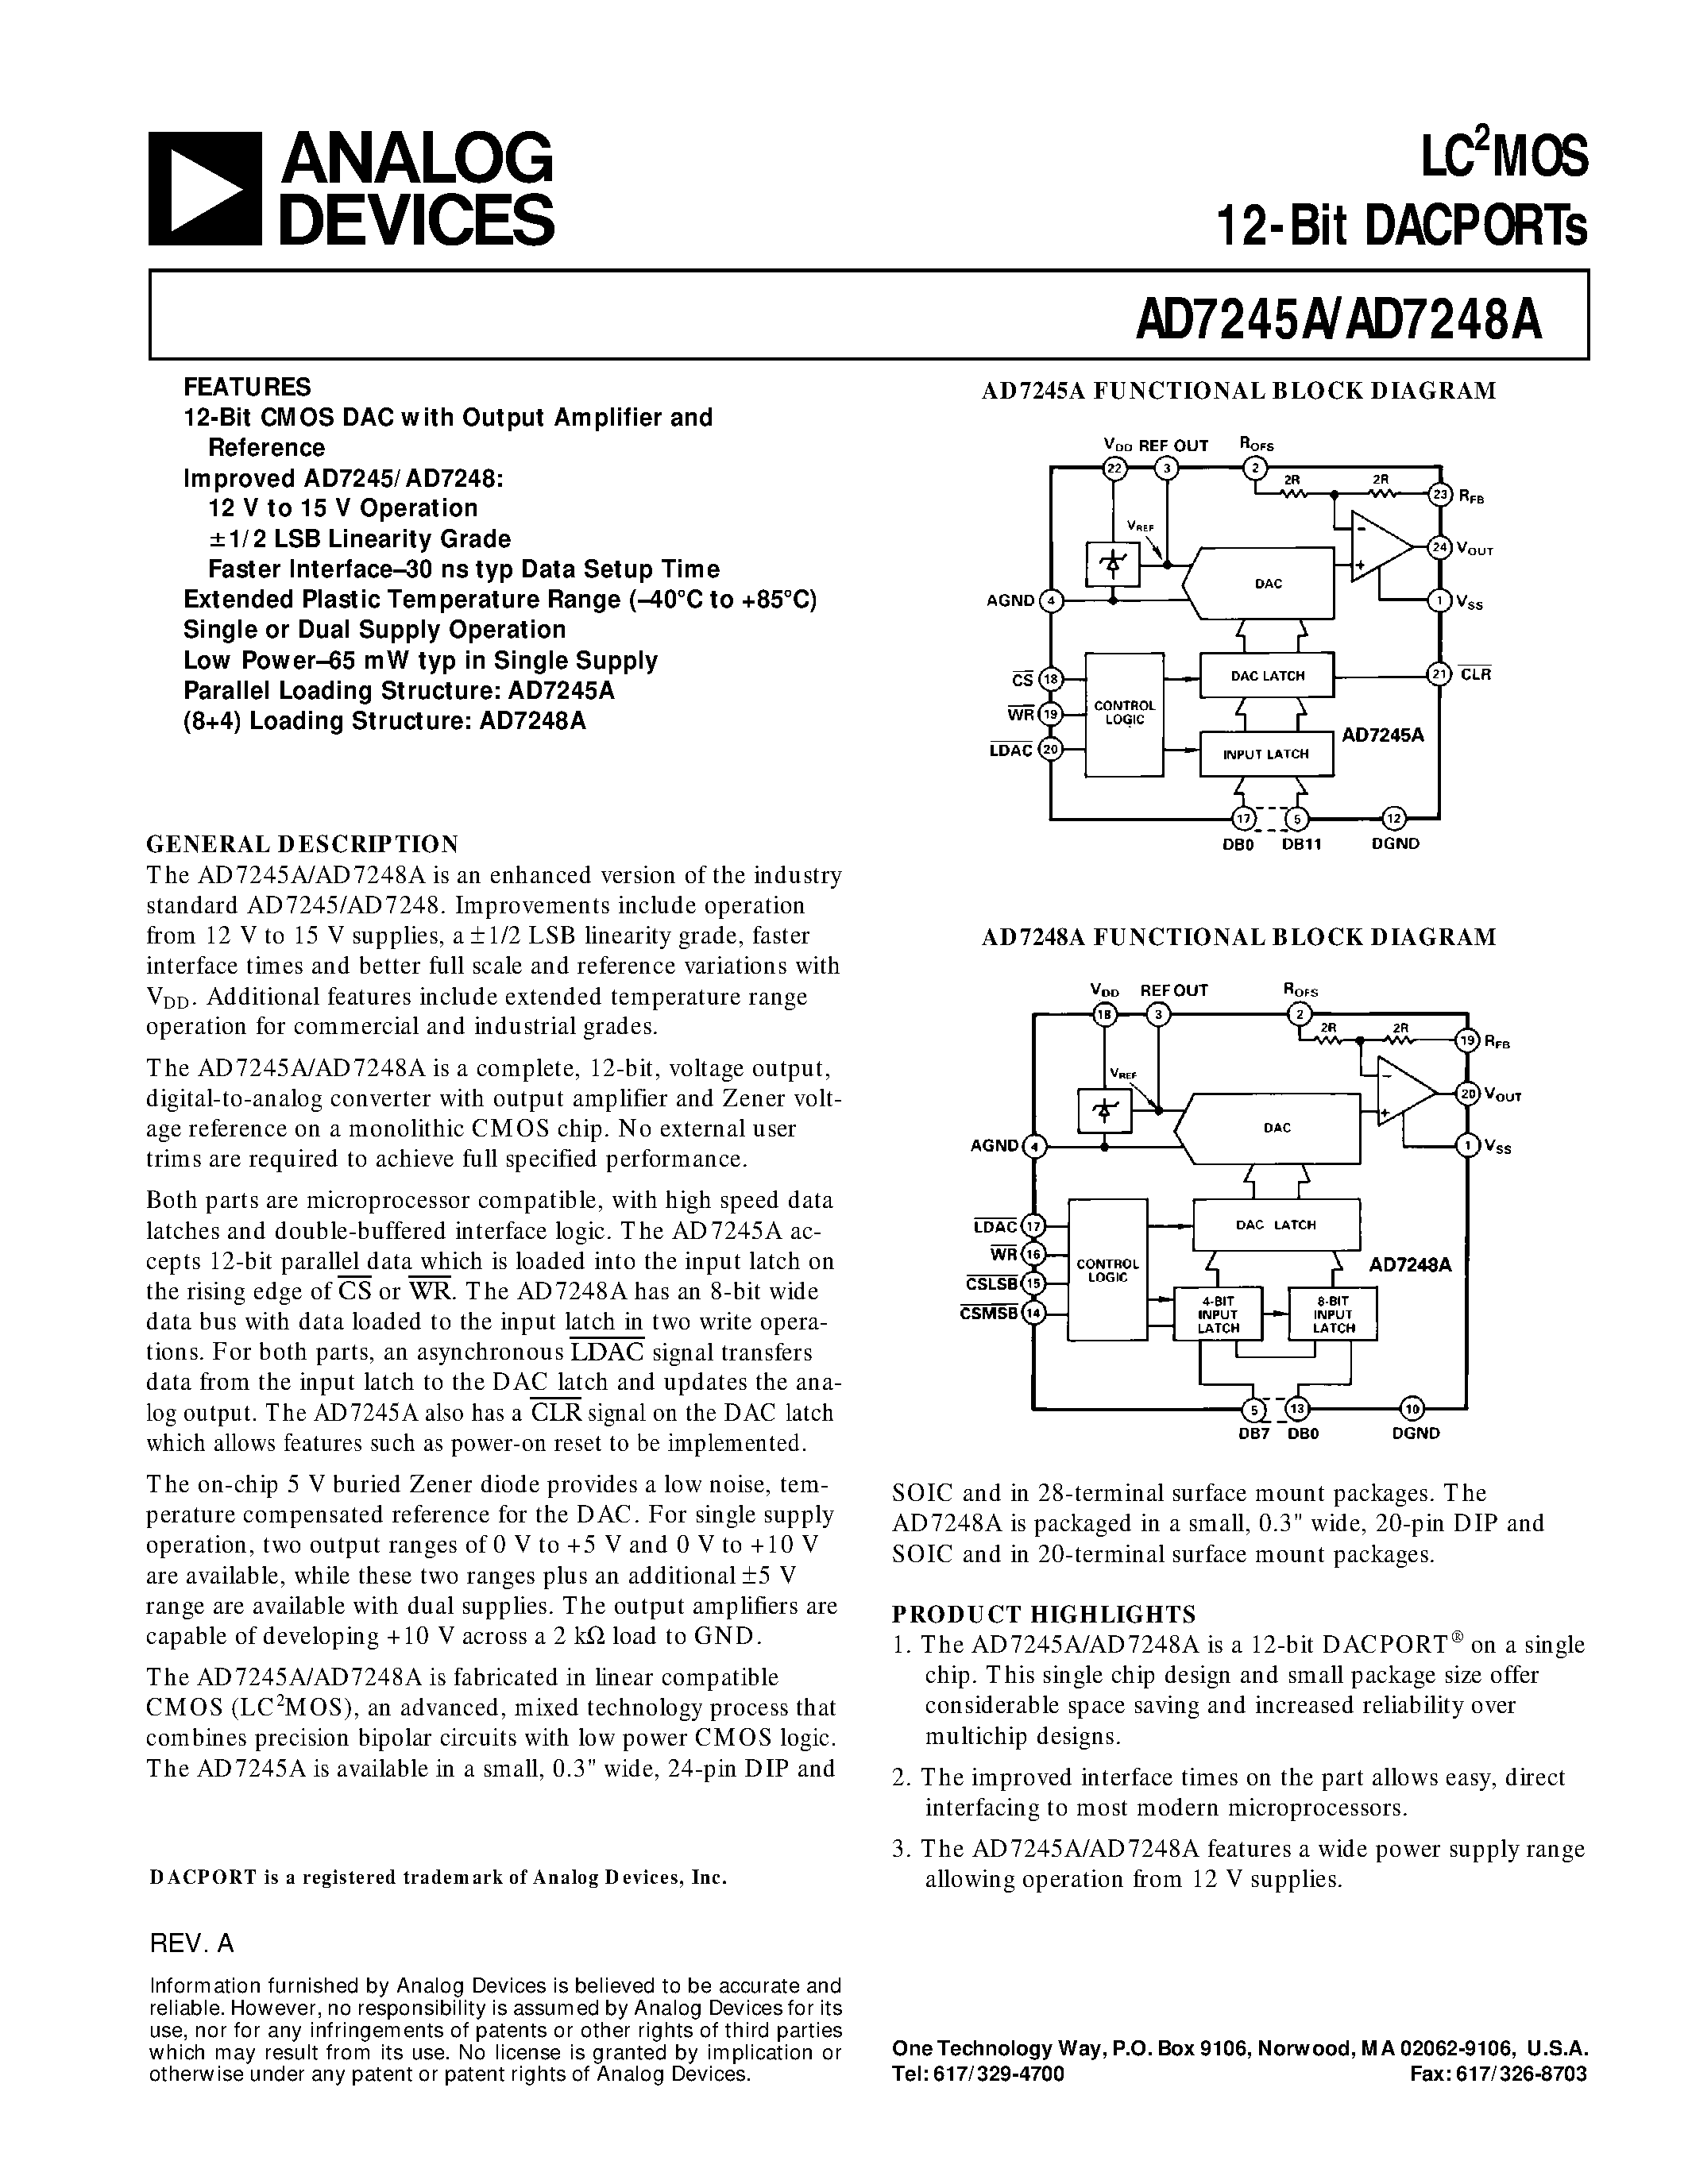 Datasheet AD7248ABN - LC2MOS 12-Bit DACPORTs page 1